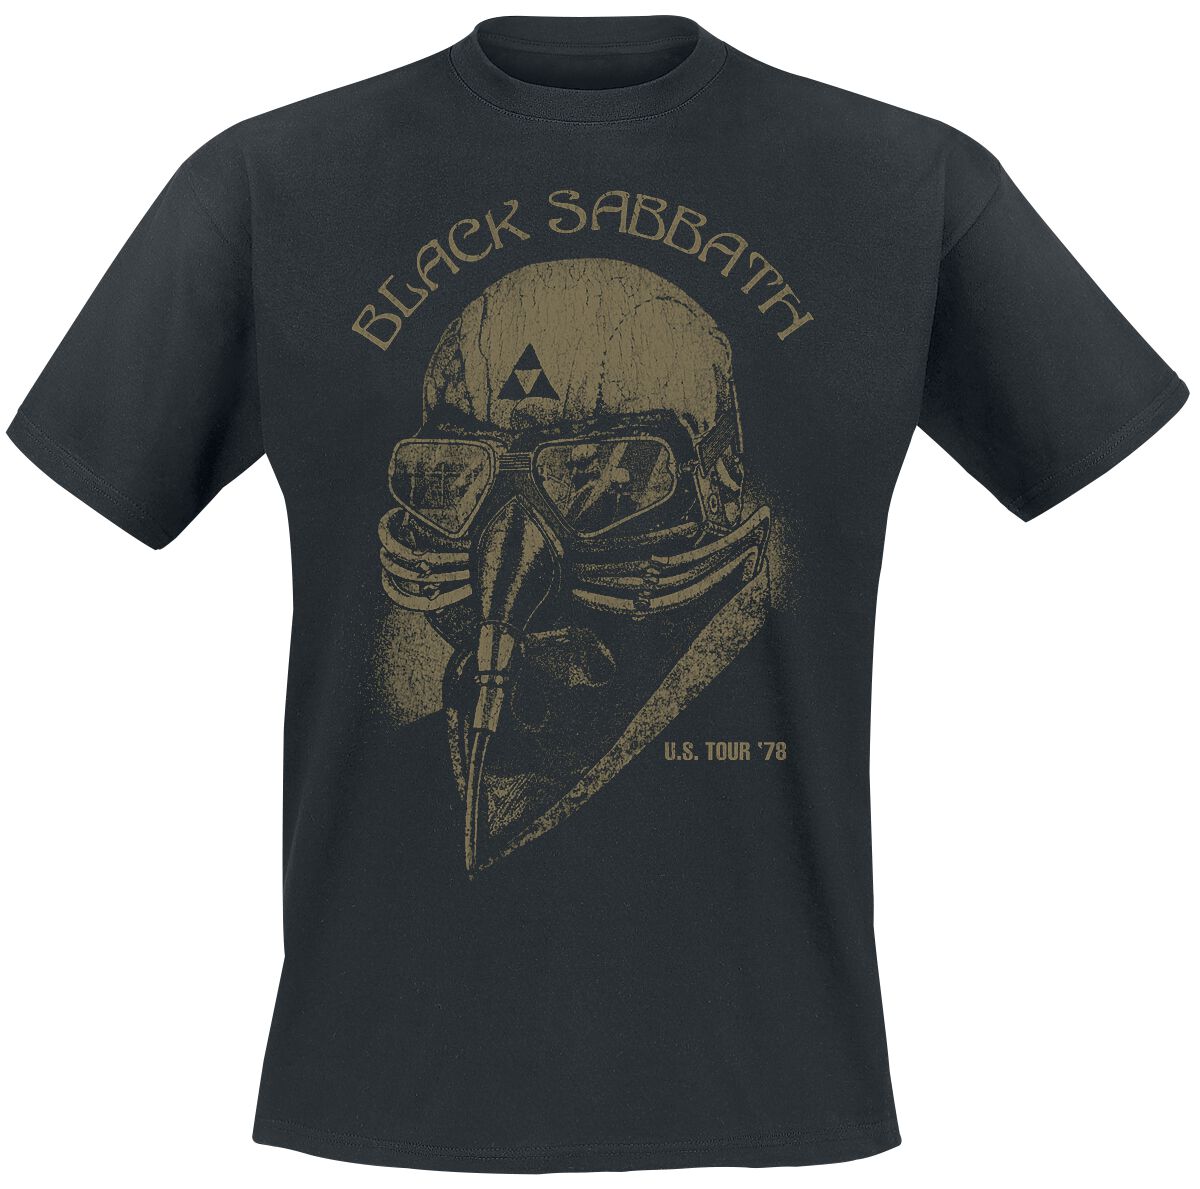 black sabbath t-shirt - u.s. tour 78 - s bis 5xl - fÃ¼r mÃ¤nner - grÃ¶ÃŸe 4xl - - lizenziertes merchandise! schwarz